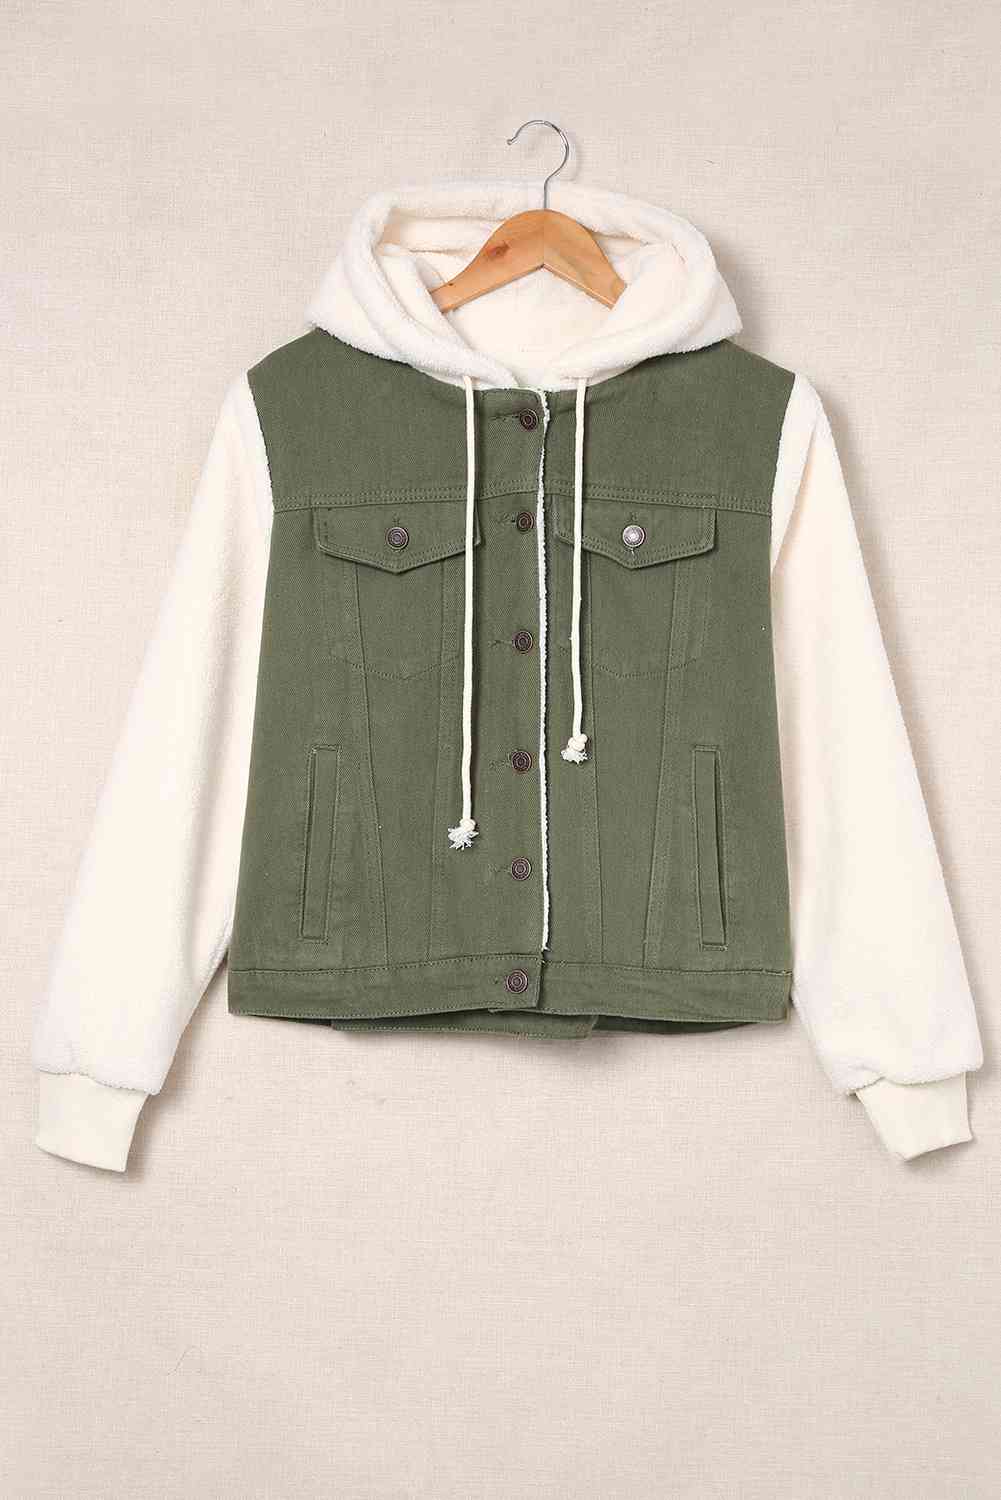 Top A Denim Two-tone Sherpa Hooded Jacket